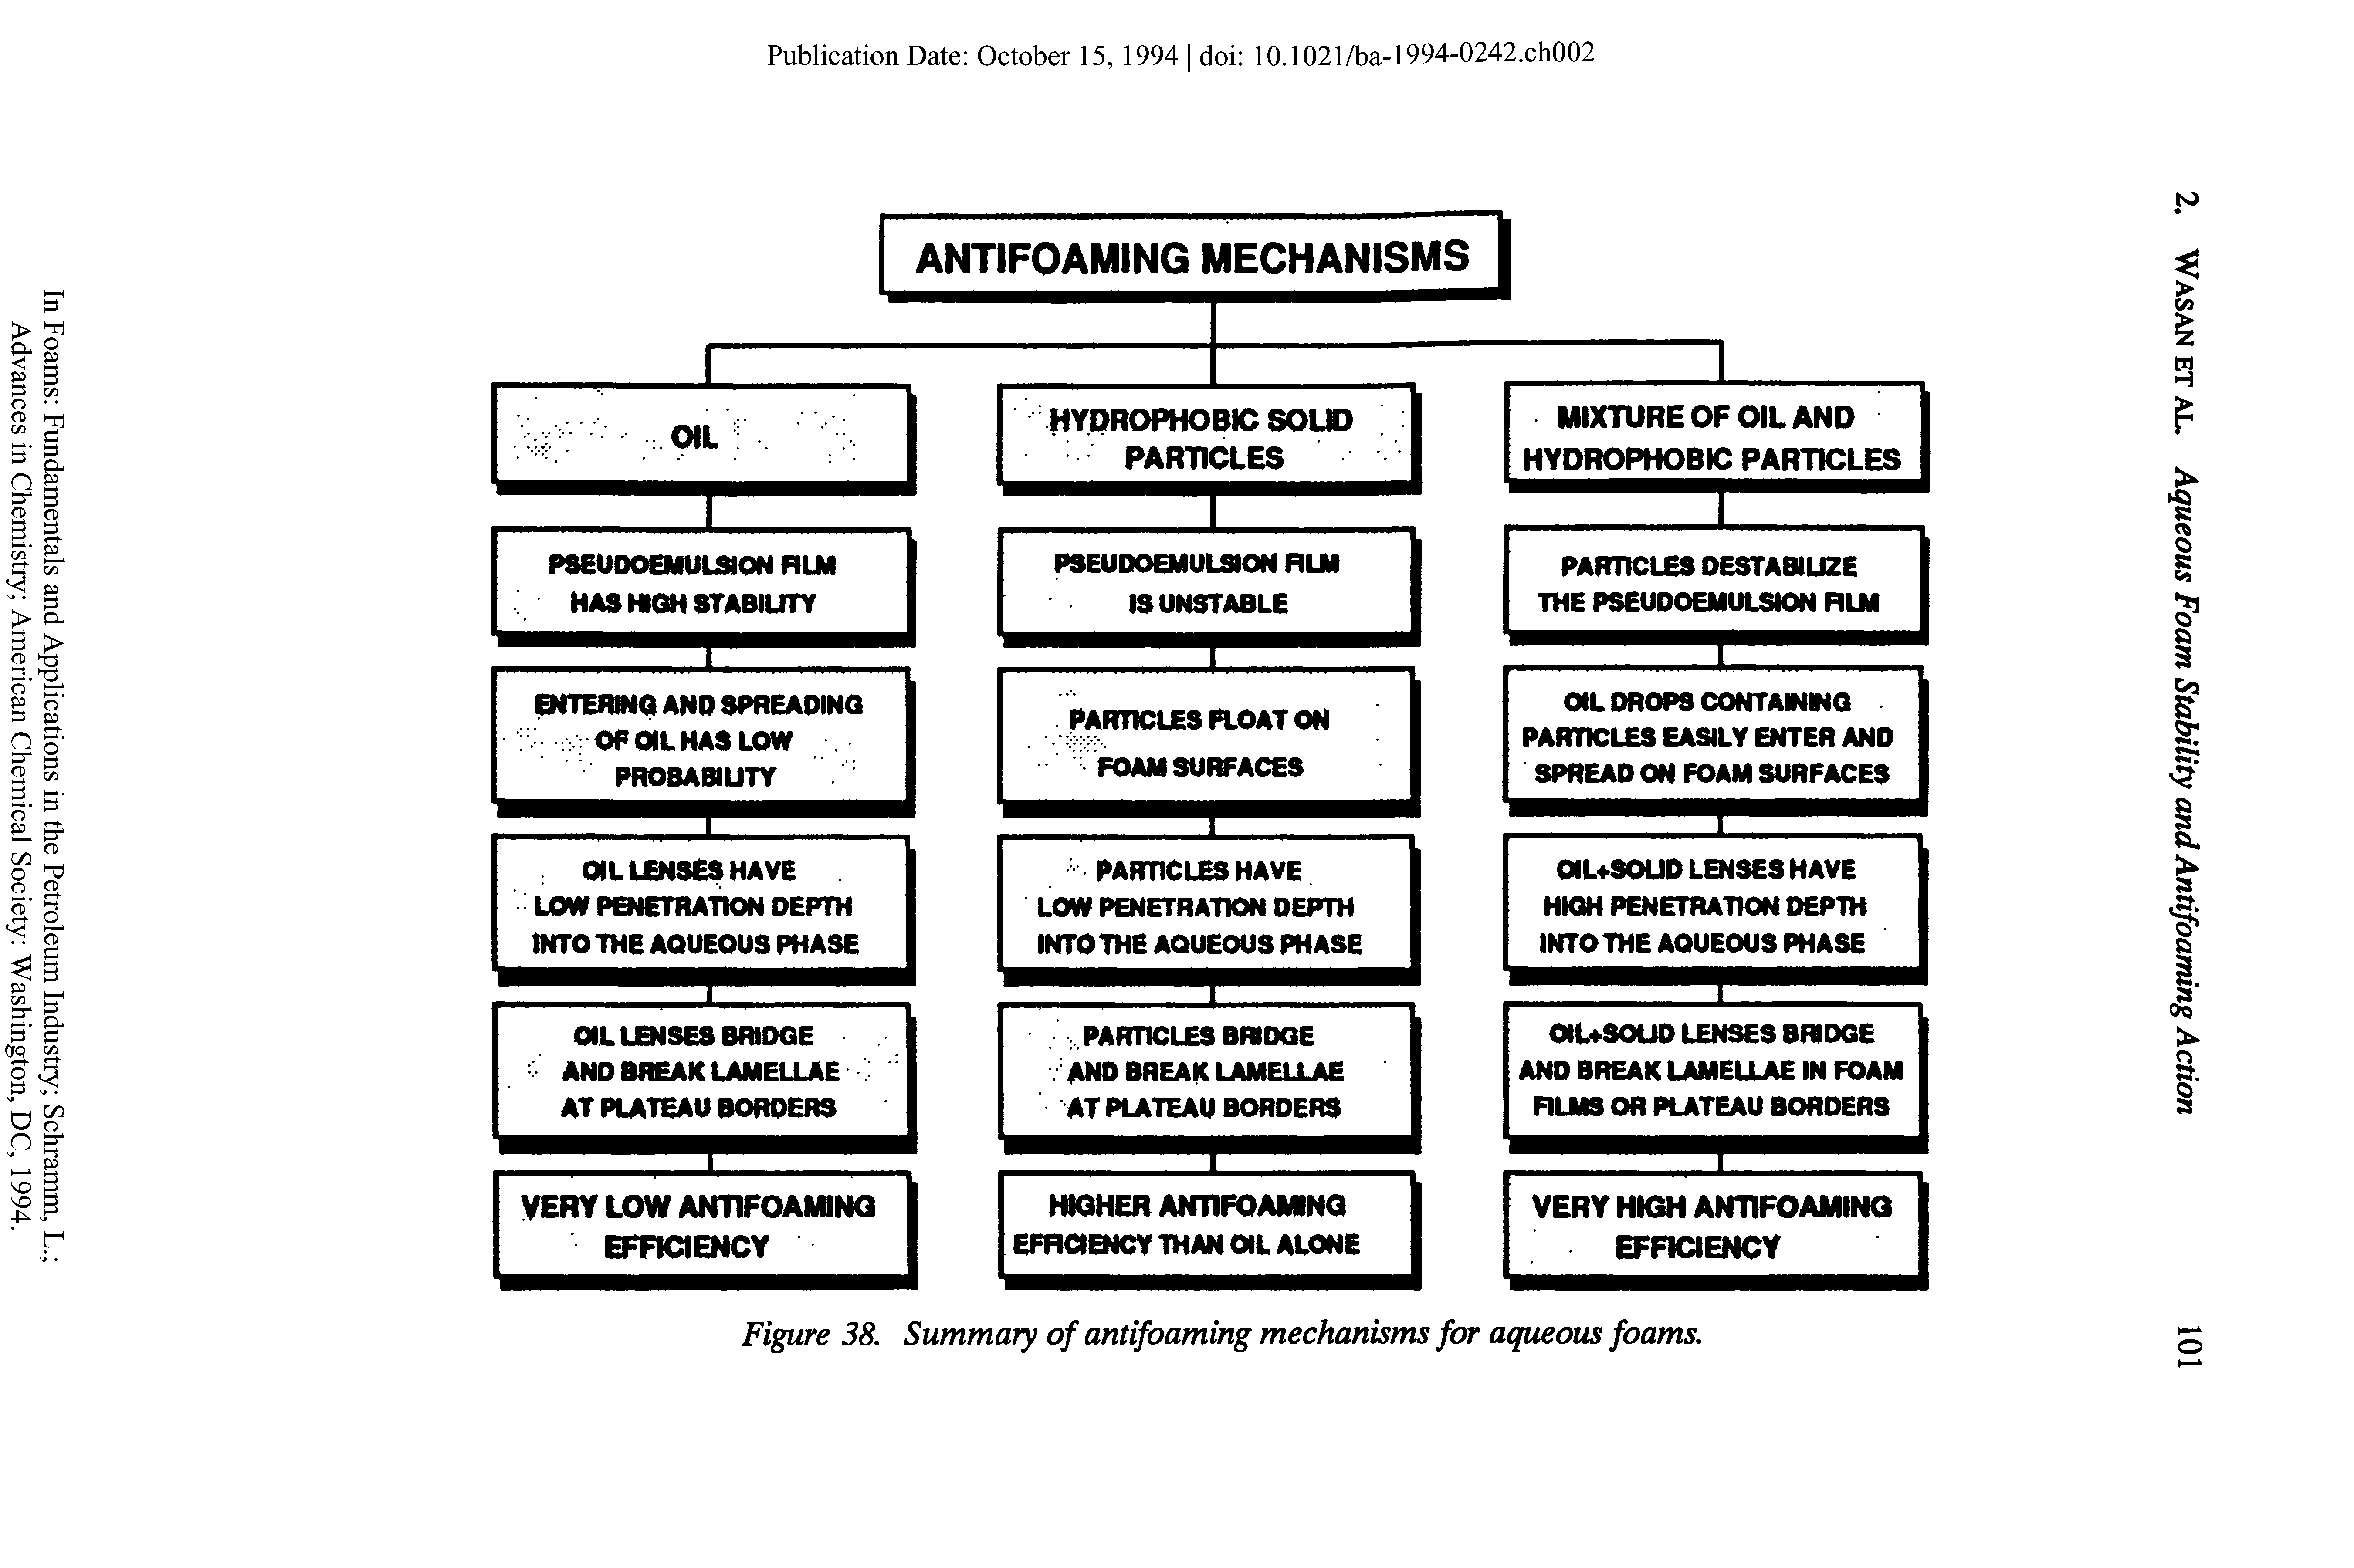 Figure 38. Summary of antifoaming mechanisms for aqueous foams.